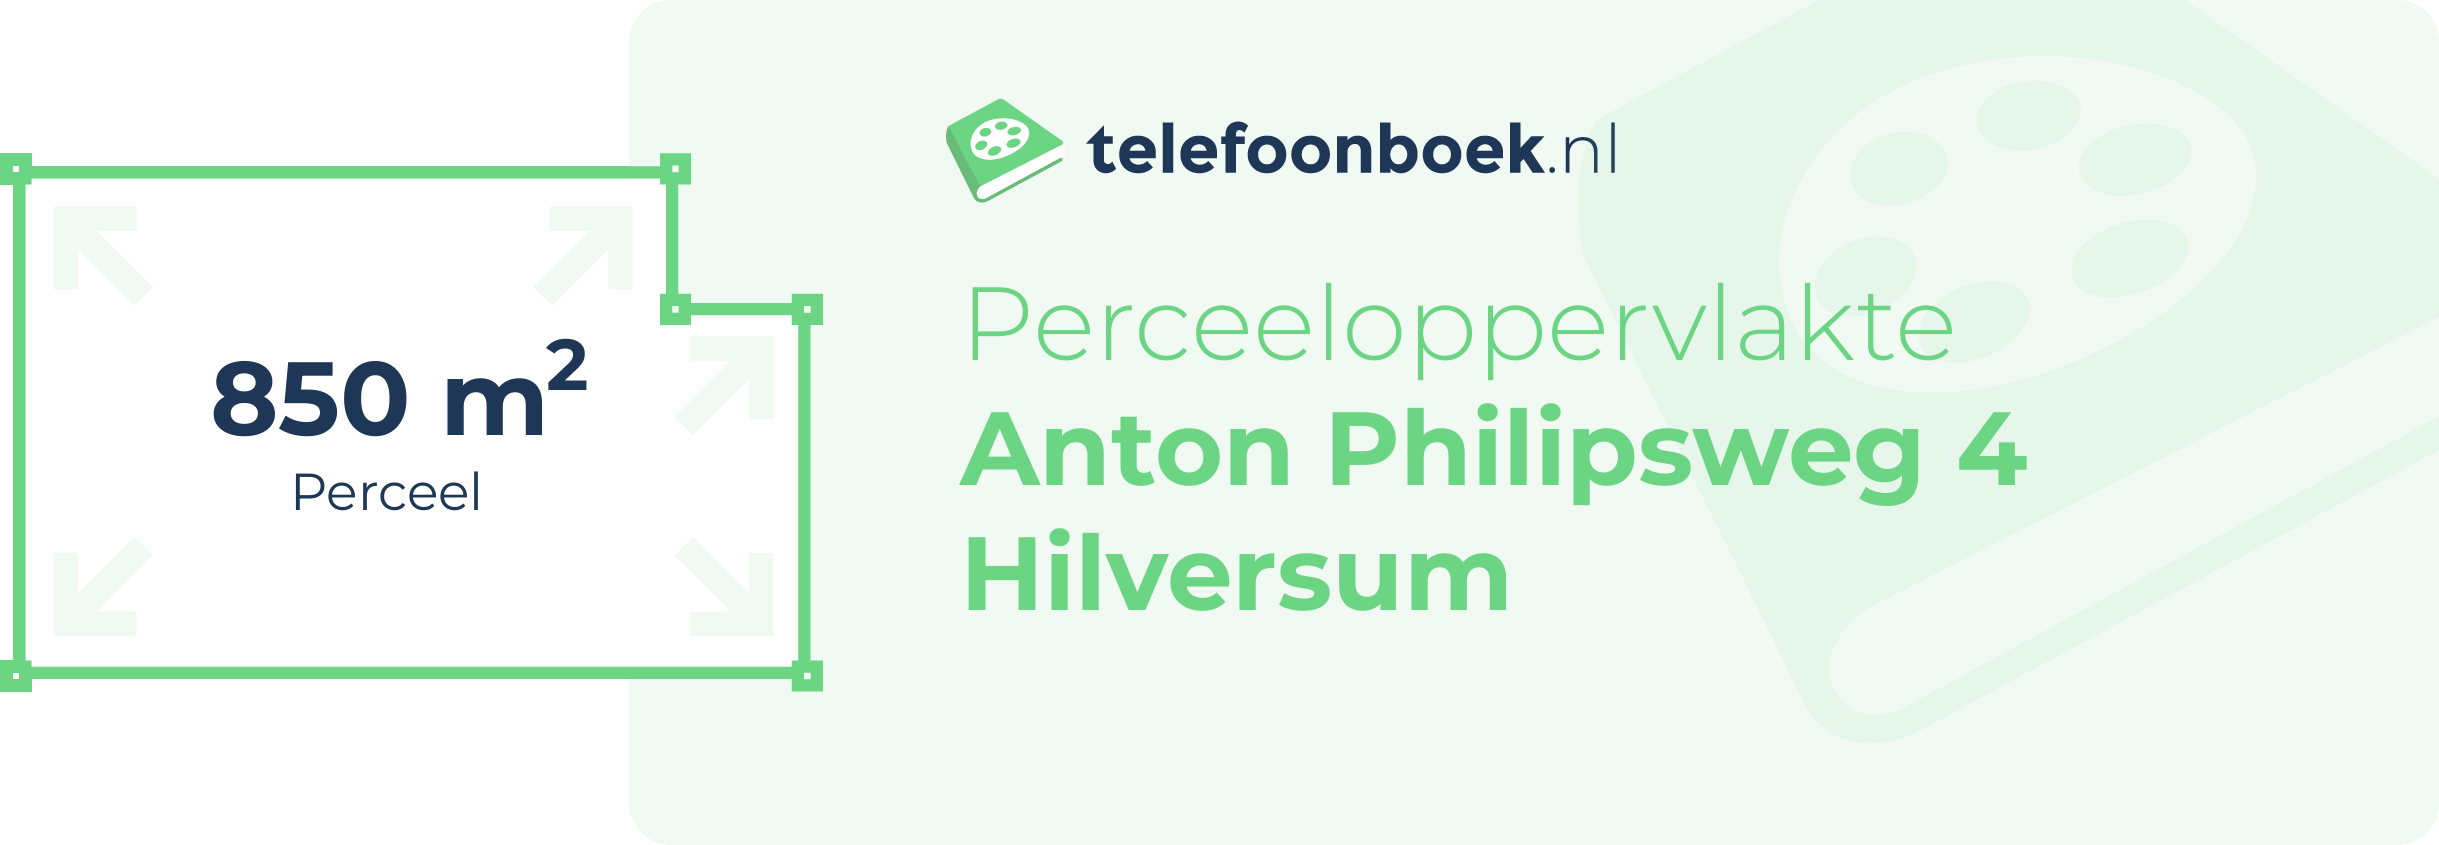 Perceeloppervlakte Anton Philipsweg 4 Hilversum